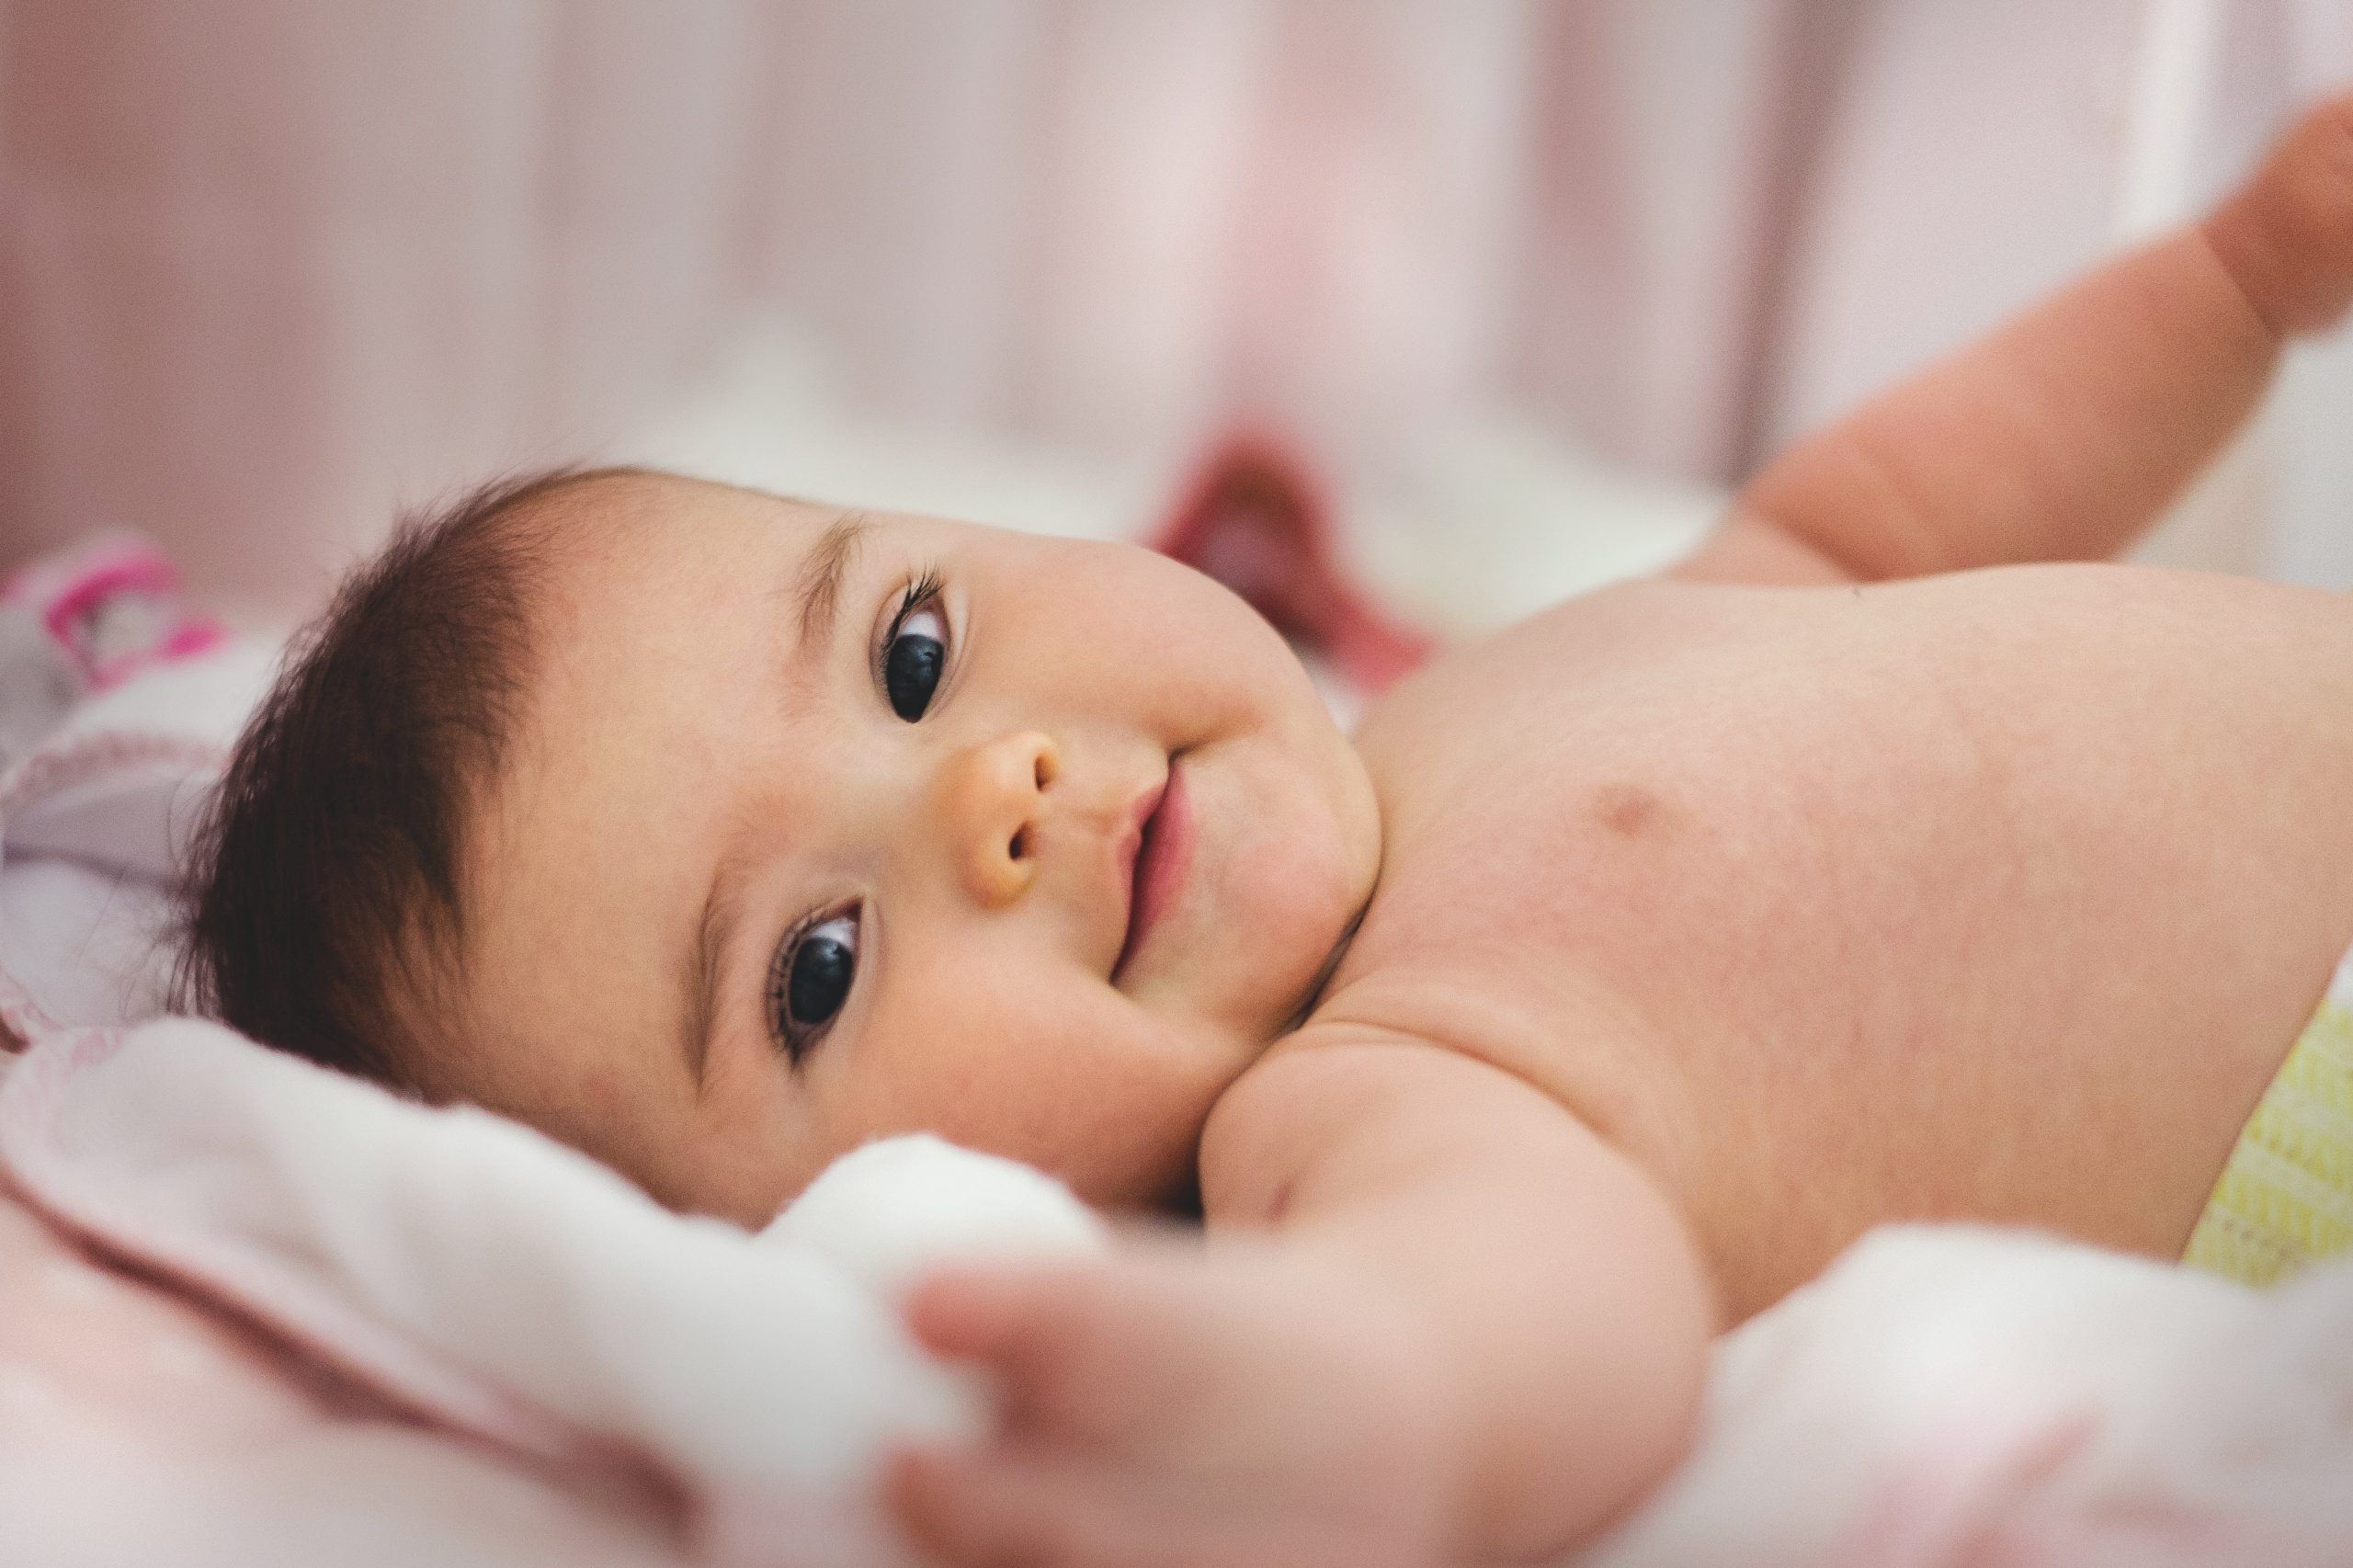 pexels daniel reche 1556706 scaled - Essentials For Newborns You Should Purchase